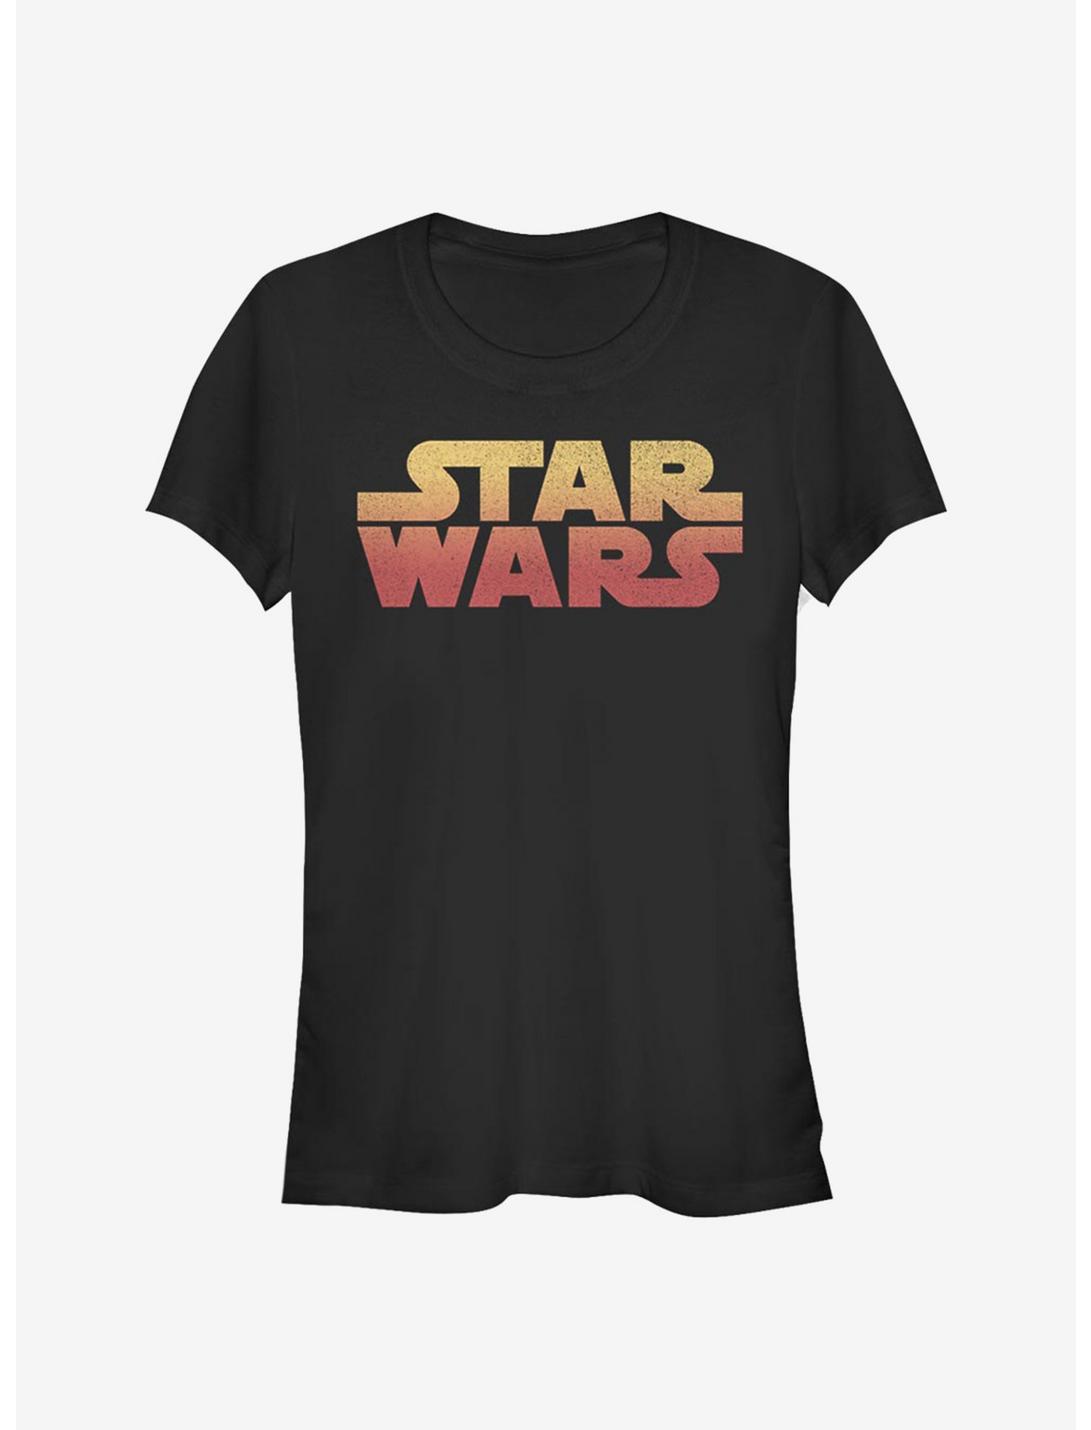 Star Wars Sunset Wars Girls T-Shirt, BLACK, hi-res